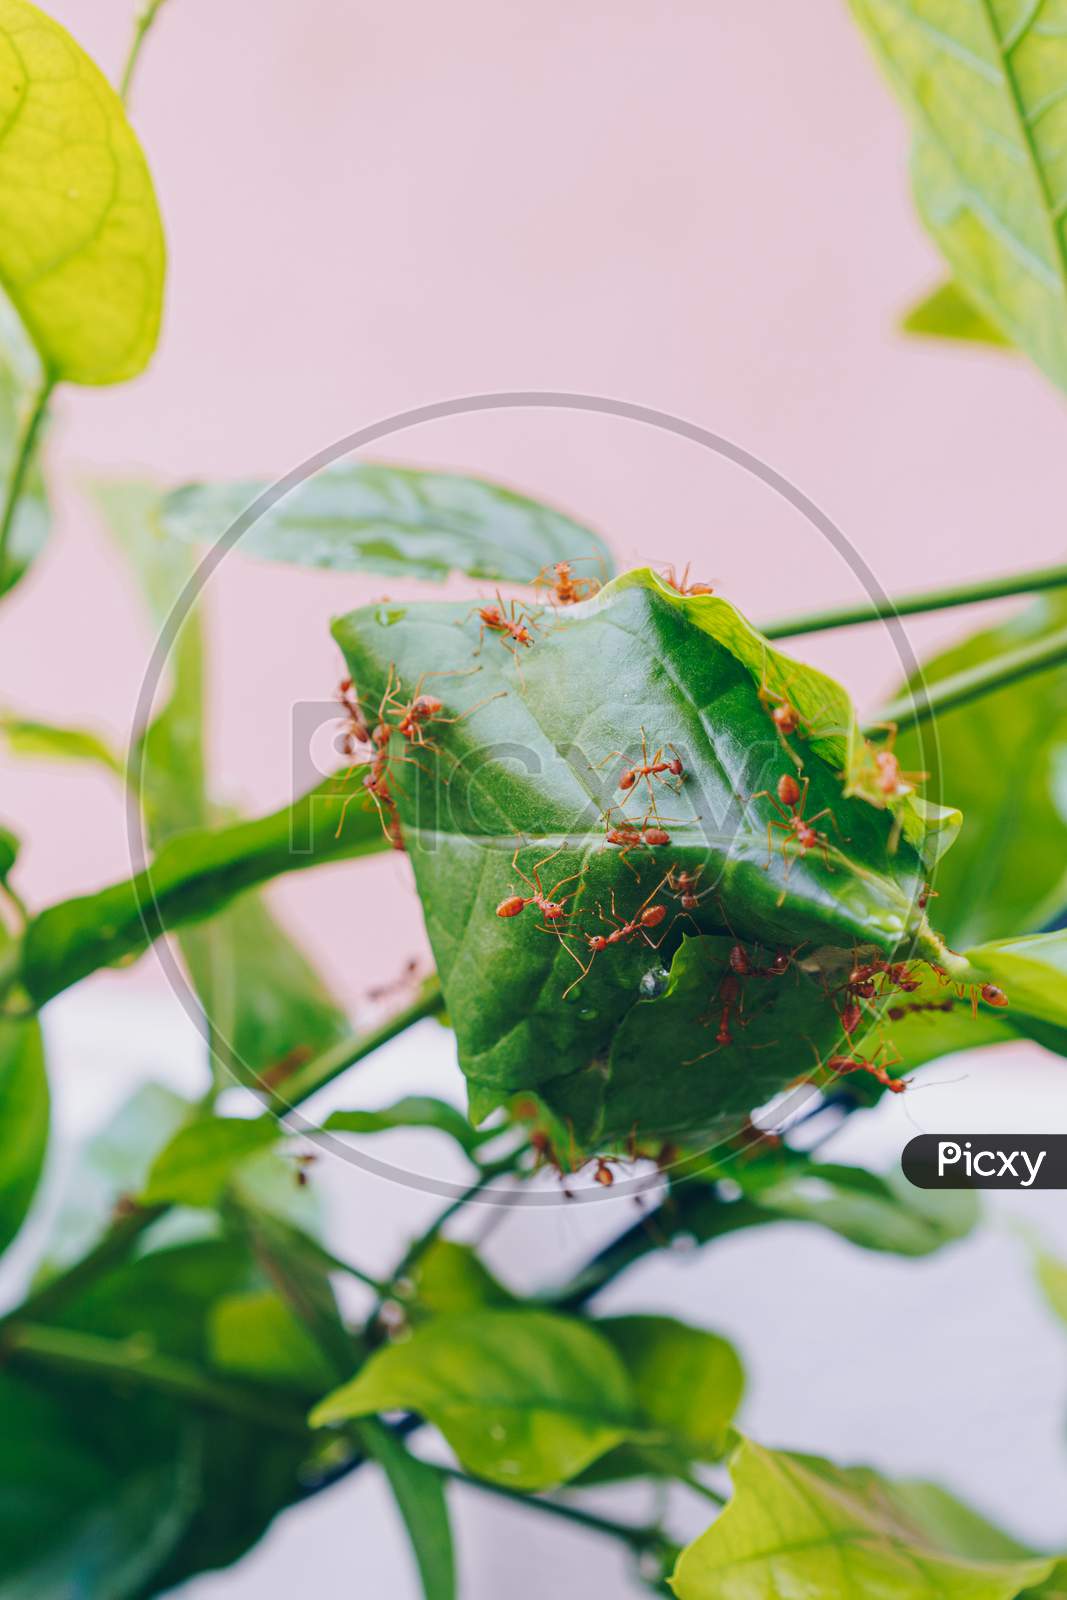 Weaver ants working on a green leaf nest